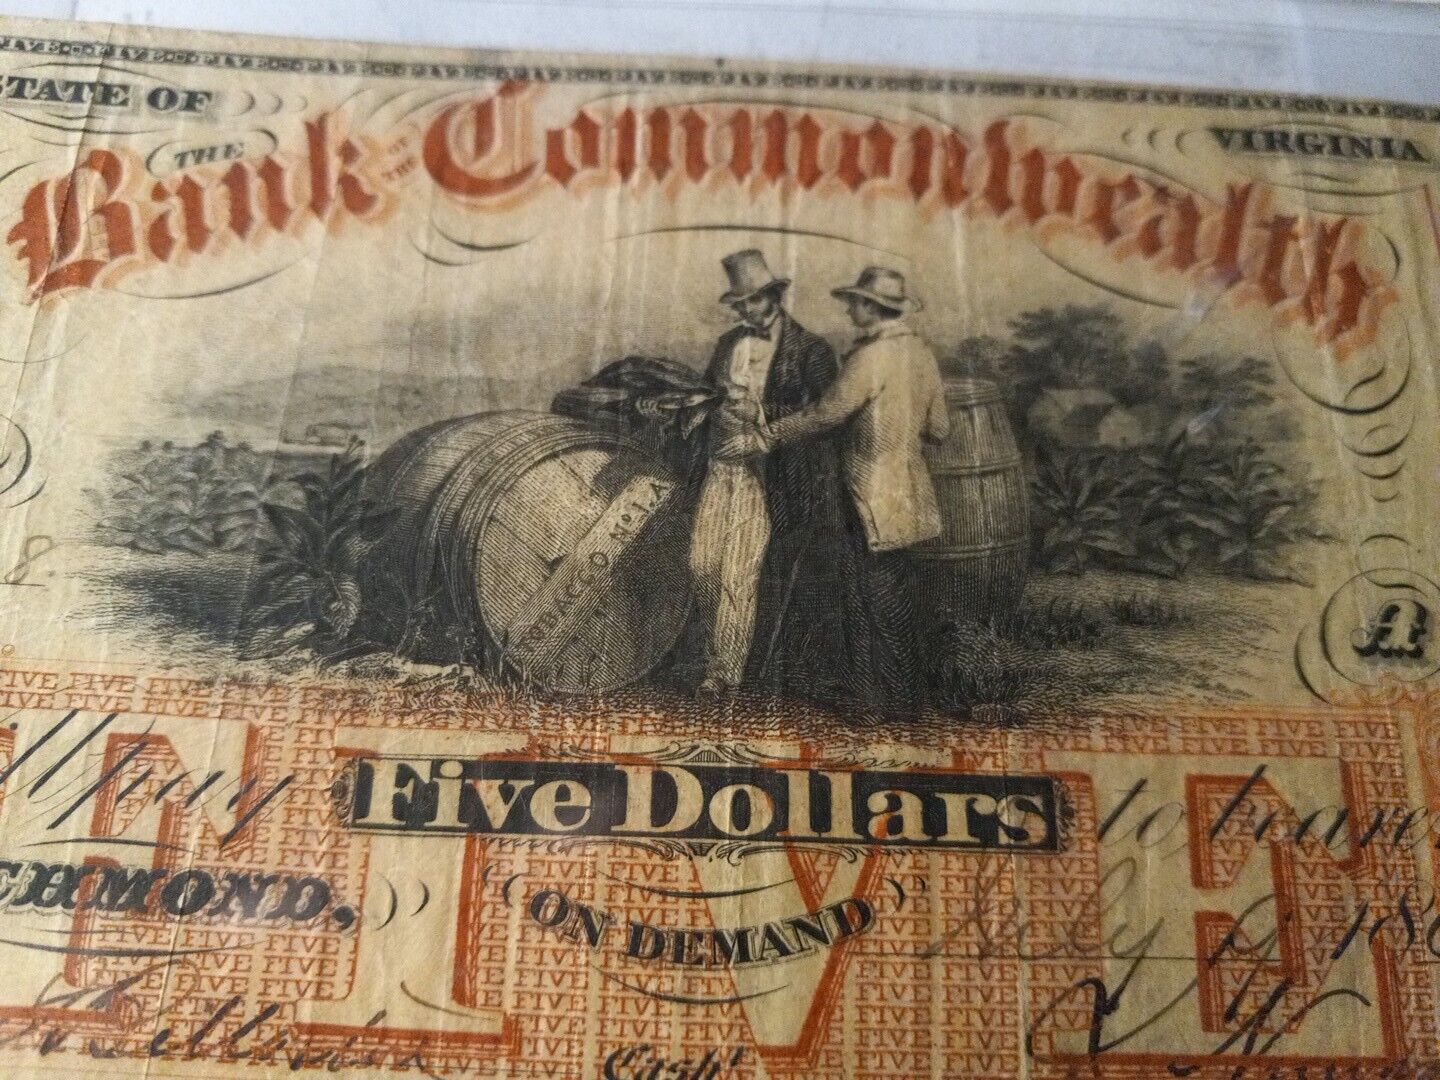 1861 $5 The Bank of the Commonwealth Richmond, VIRGINIA CIVIL WAR ERA